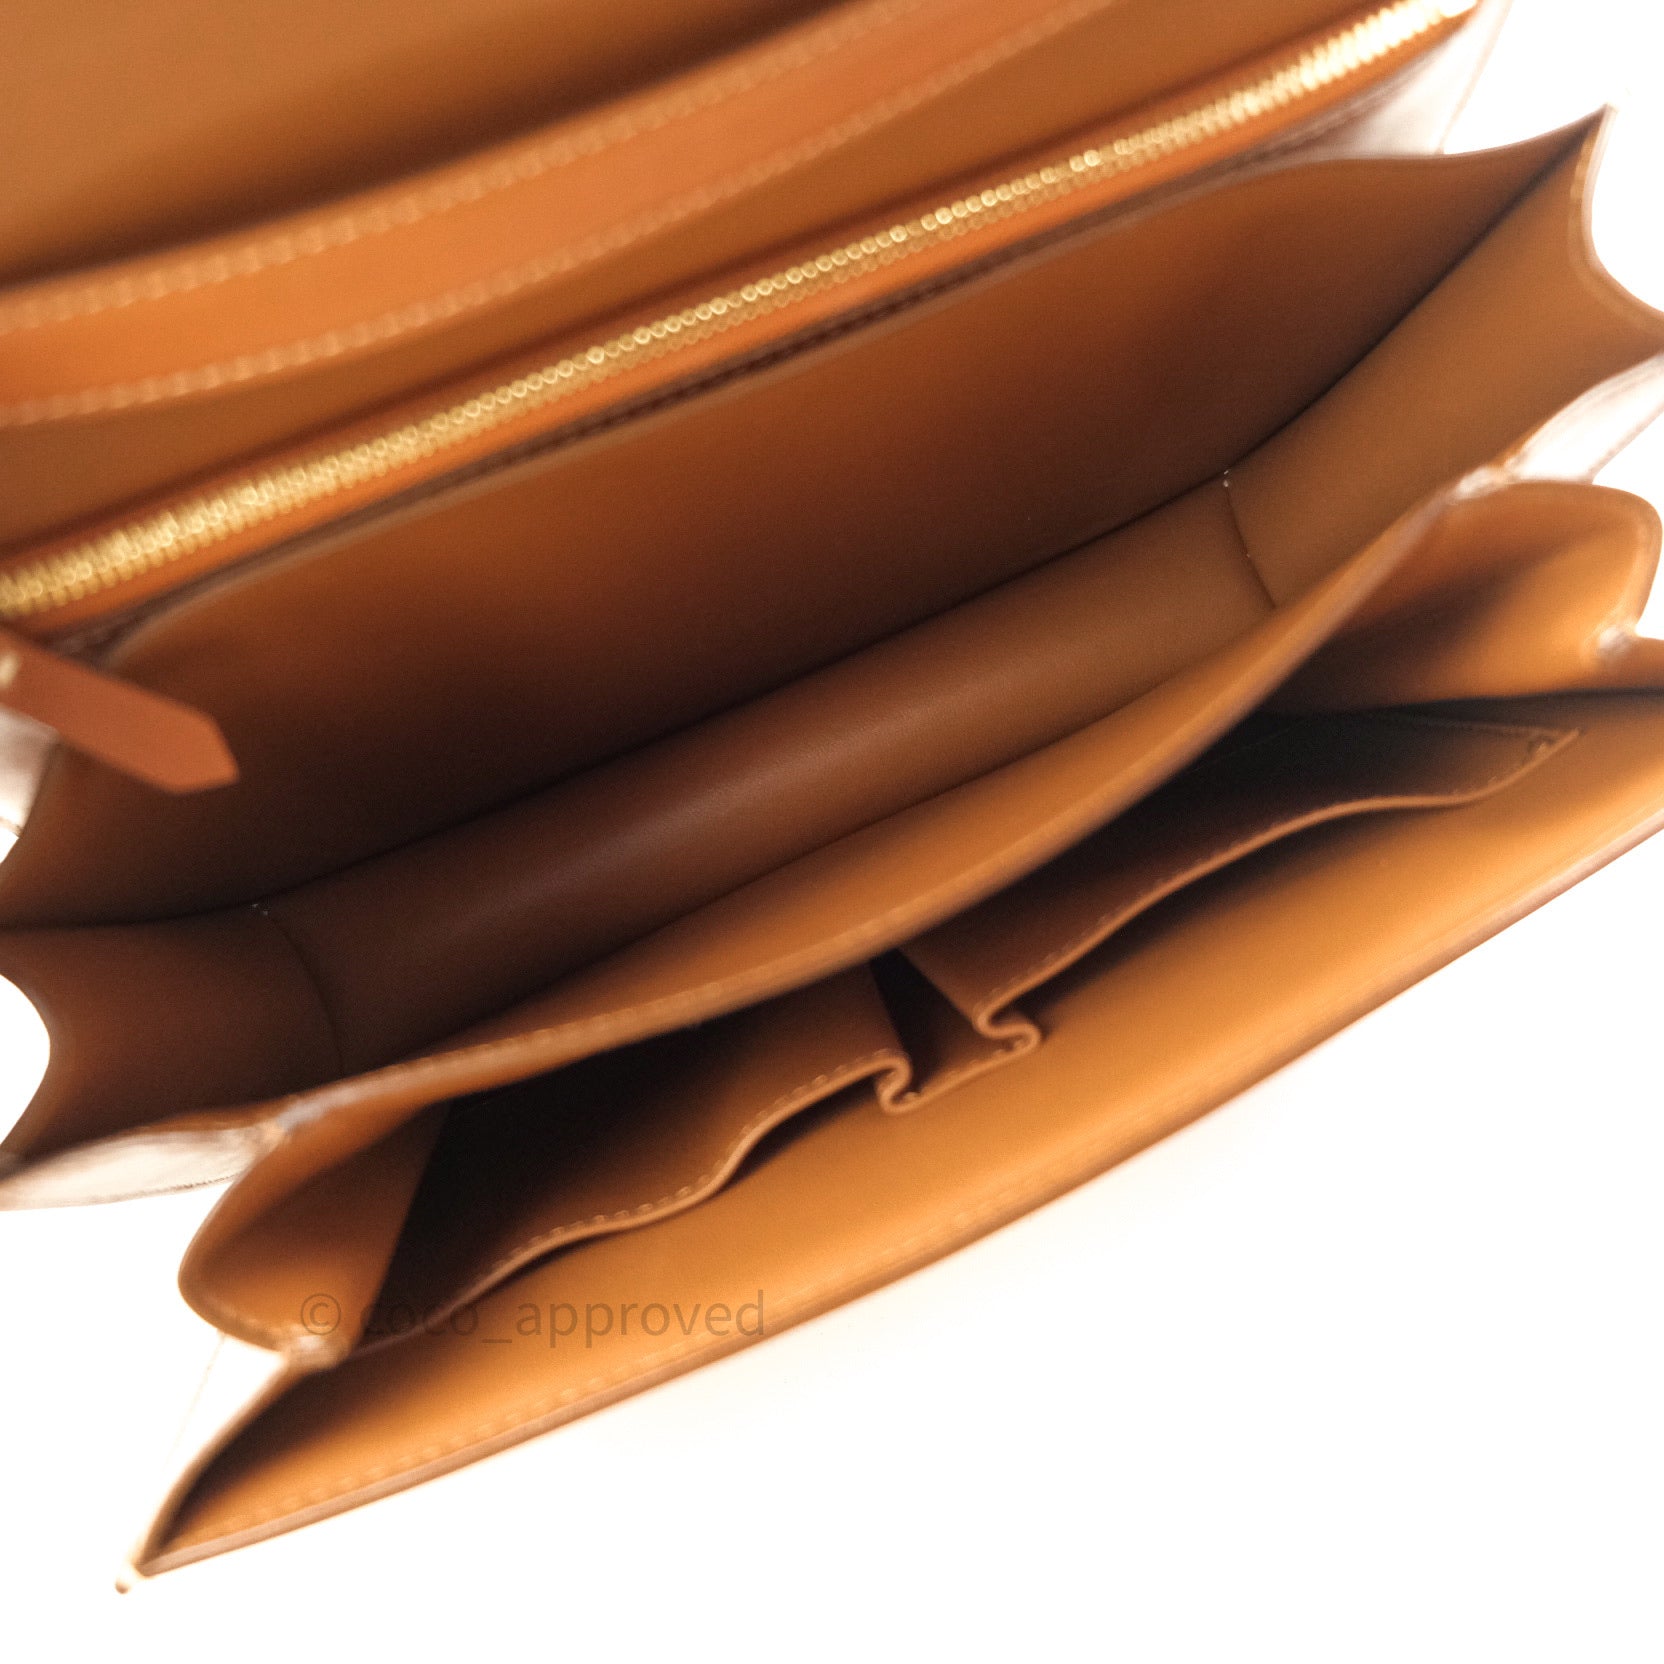 Celine Box Brown Tan Calfskin Leather Medium Classic Gold Hardware – Coco  Approved Studio